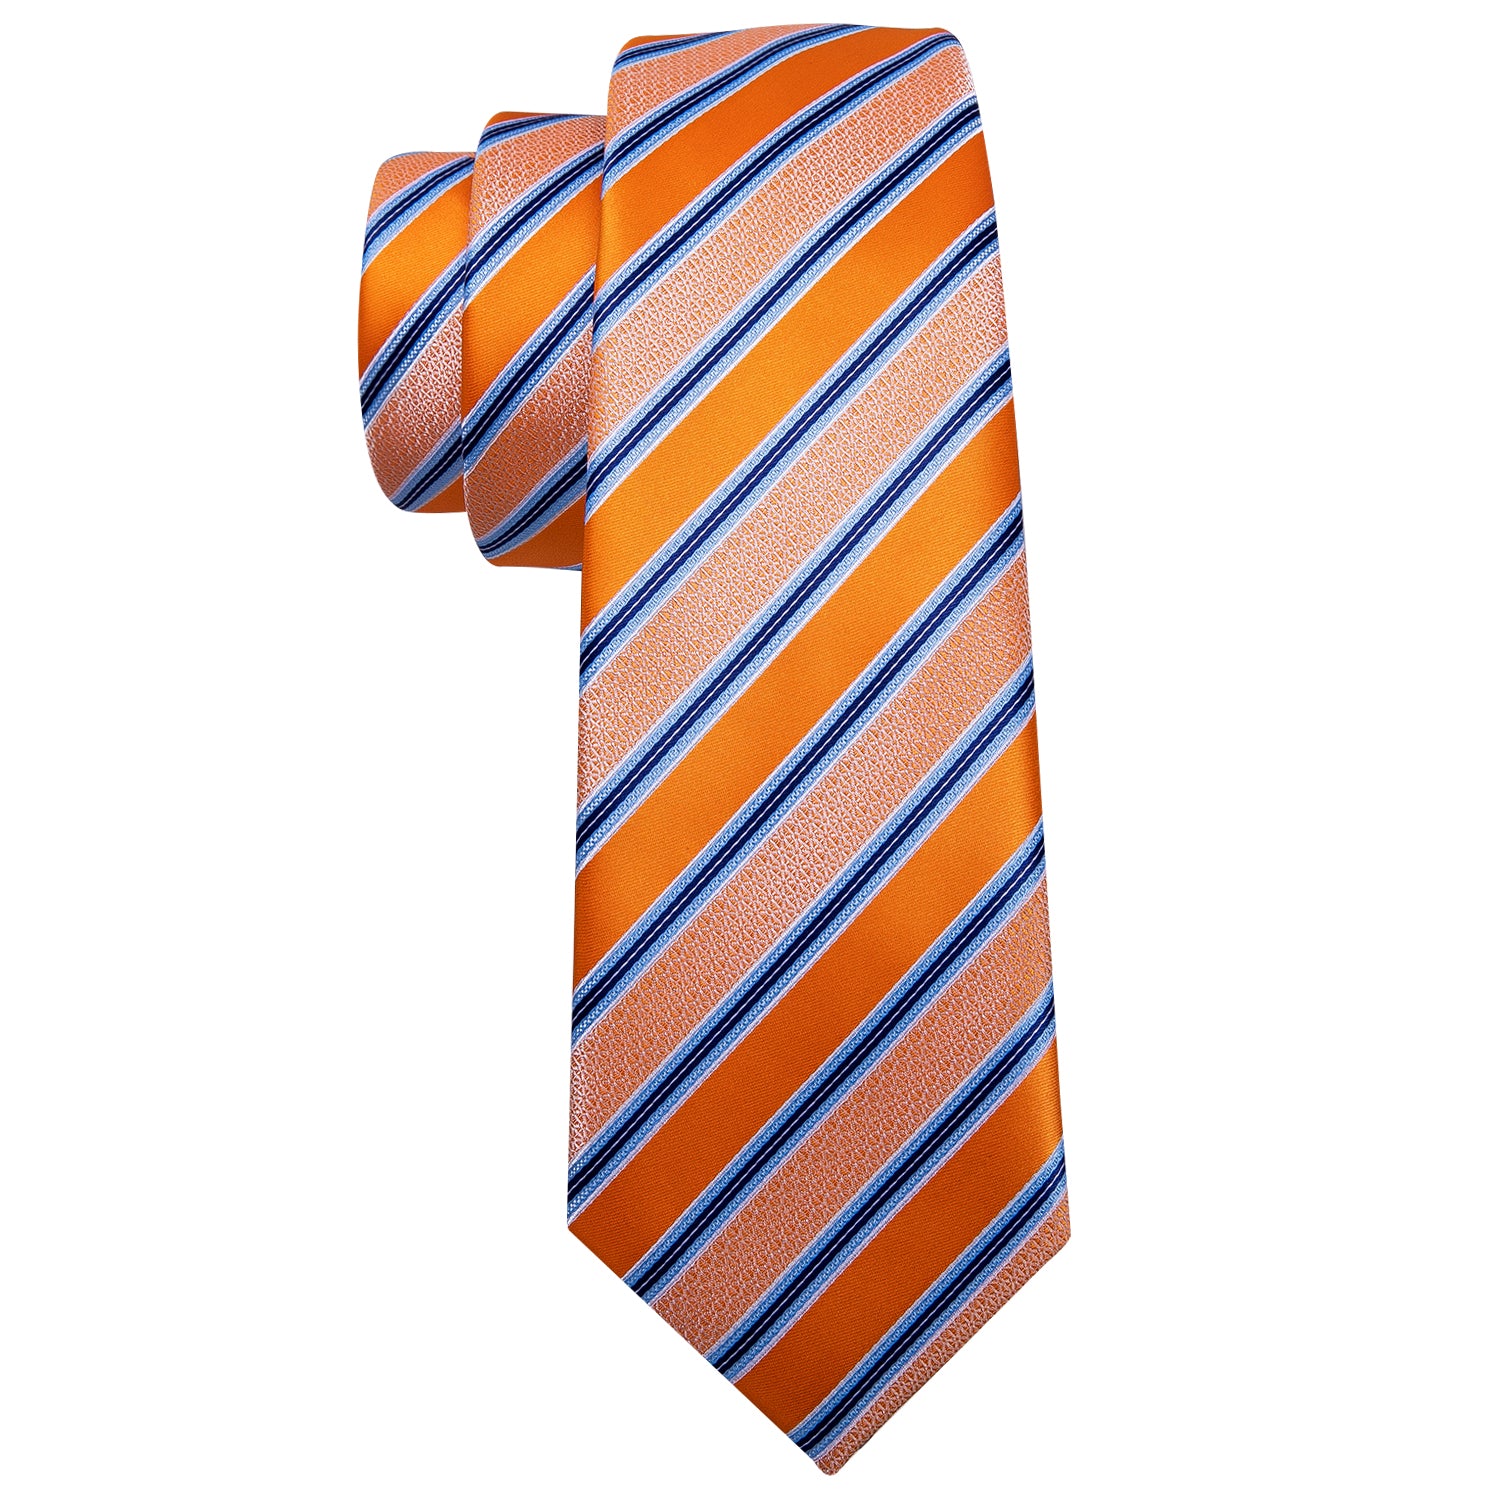 New Novelty Orange Blue Striped Silk Tie Hanky Cufflinks Set